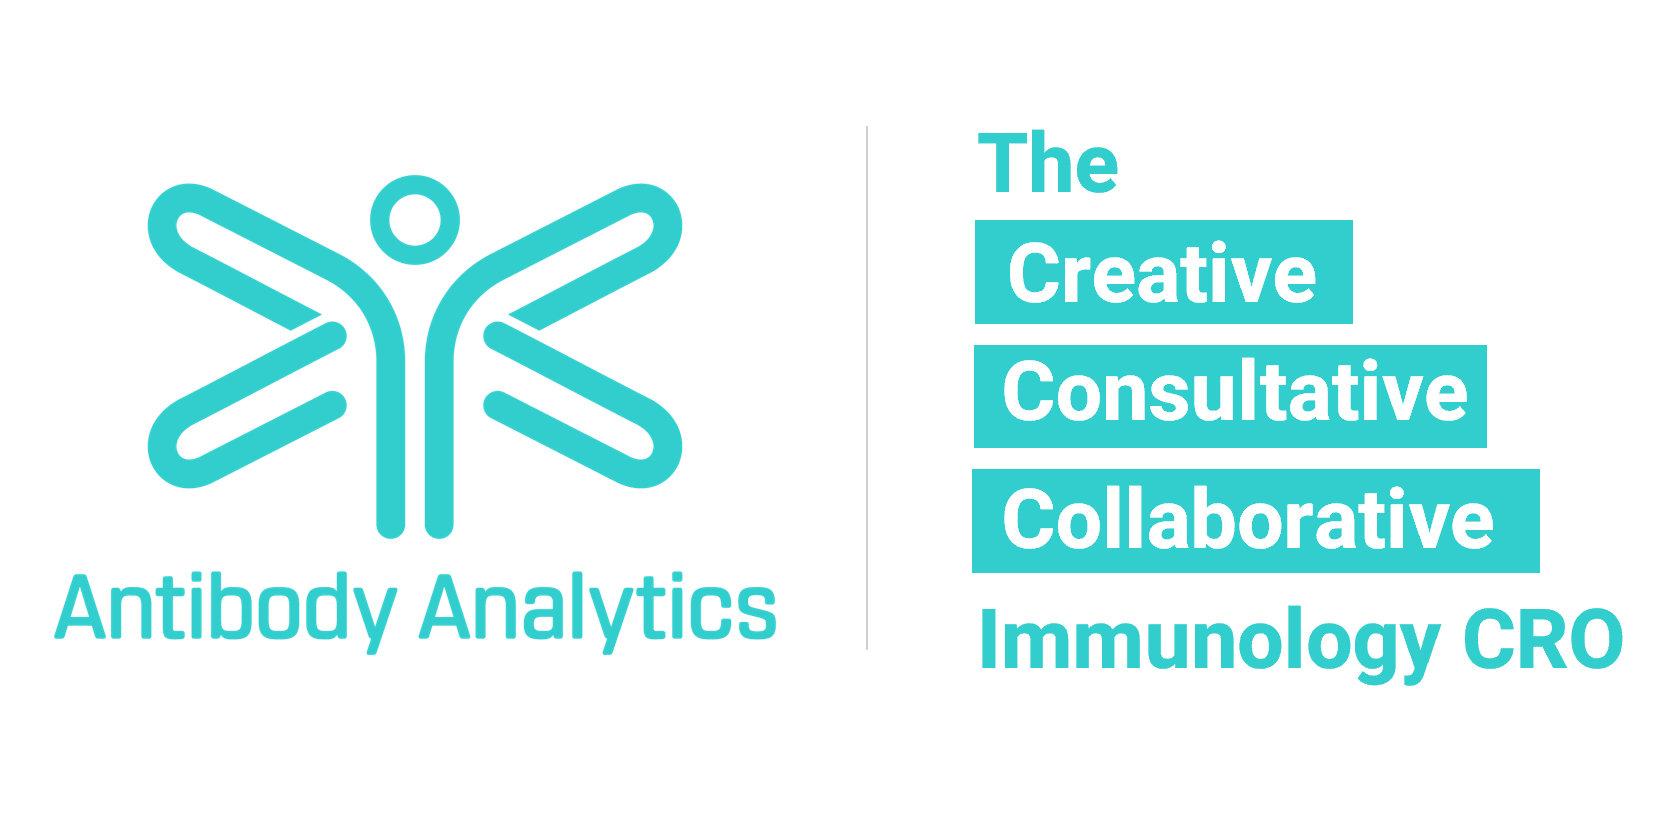 Antibody Analytics - The Creative Collaborative Consultative Immunology CRO - 01